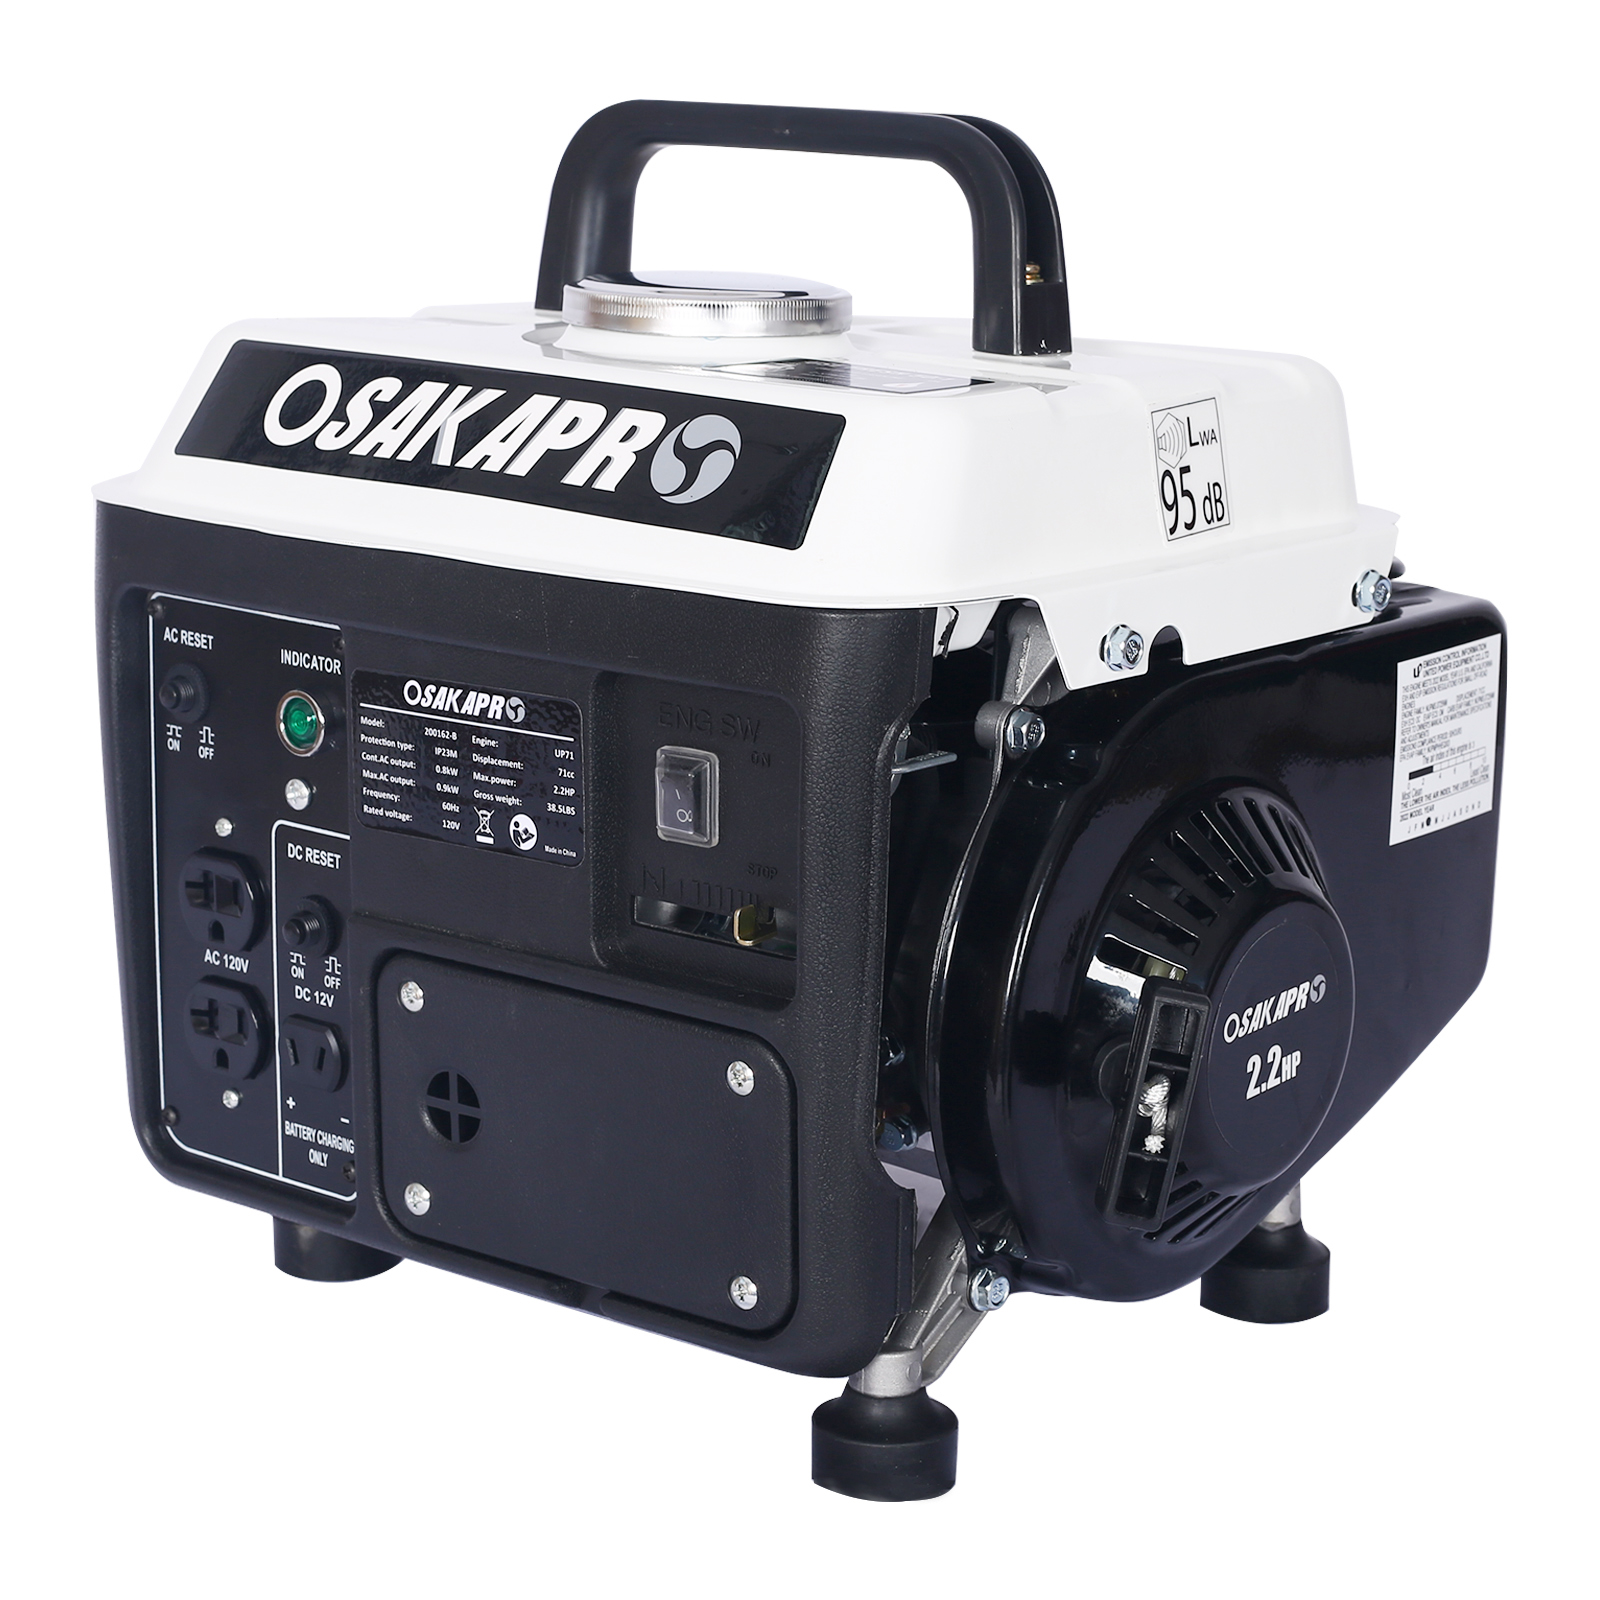 Portable Generator, Outdoor generator Low Noise, Gas Powered Generator,Generators for Home Use-CASAINC